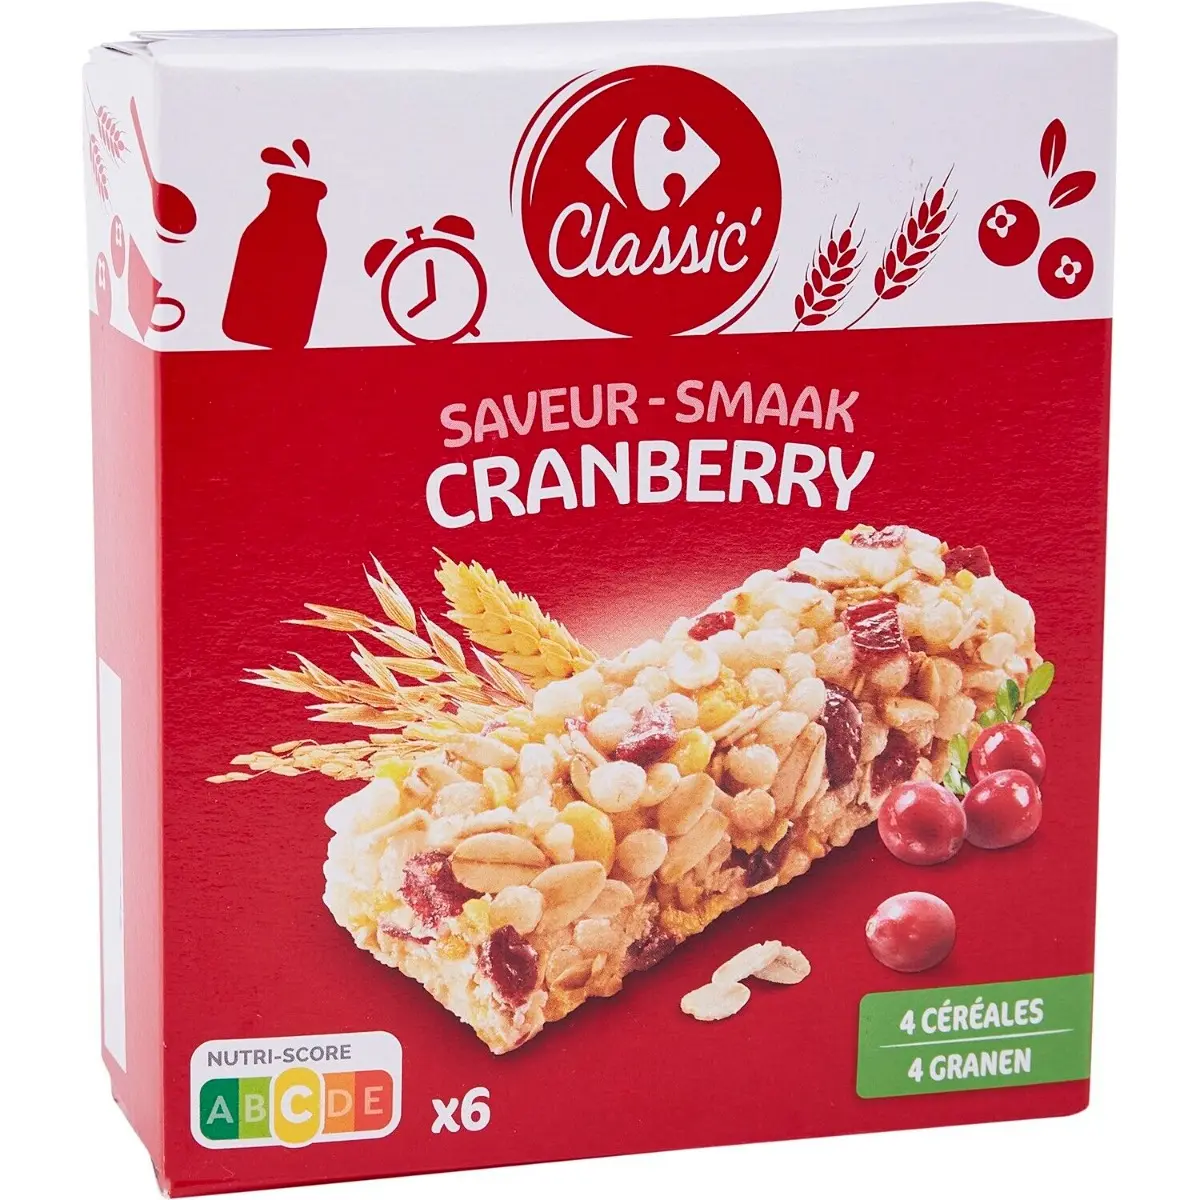 Baton cereale Carrefour, cu Cranberry 125g